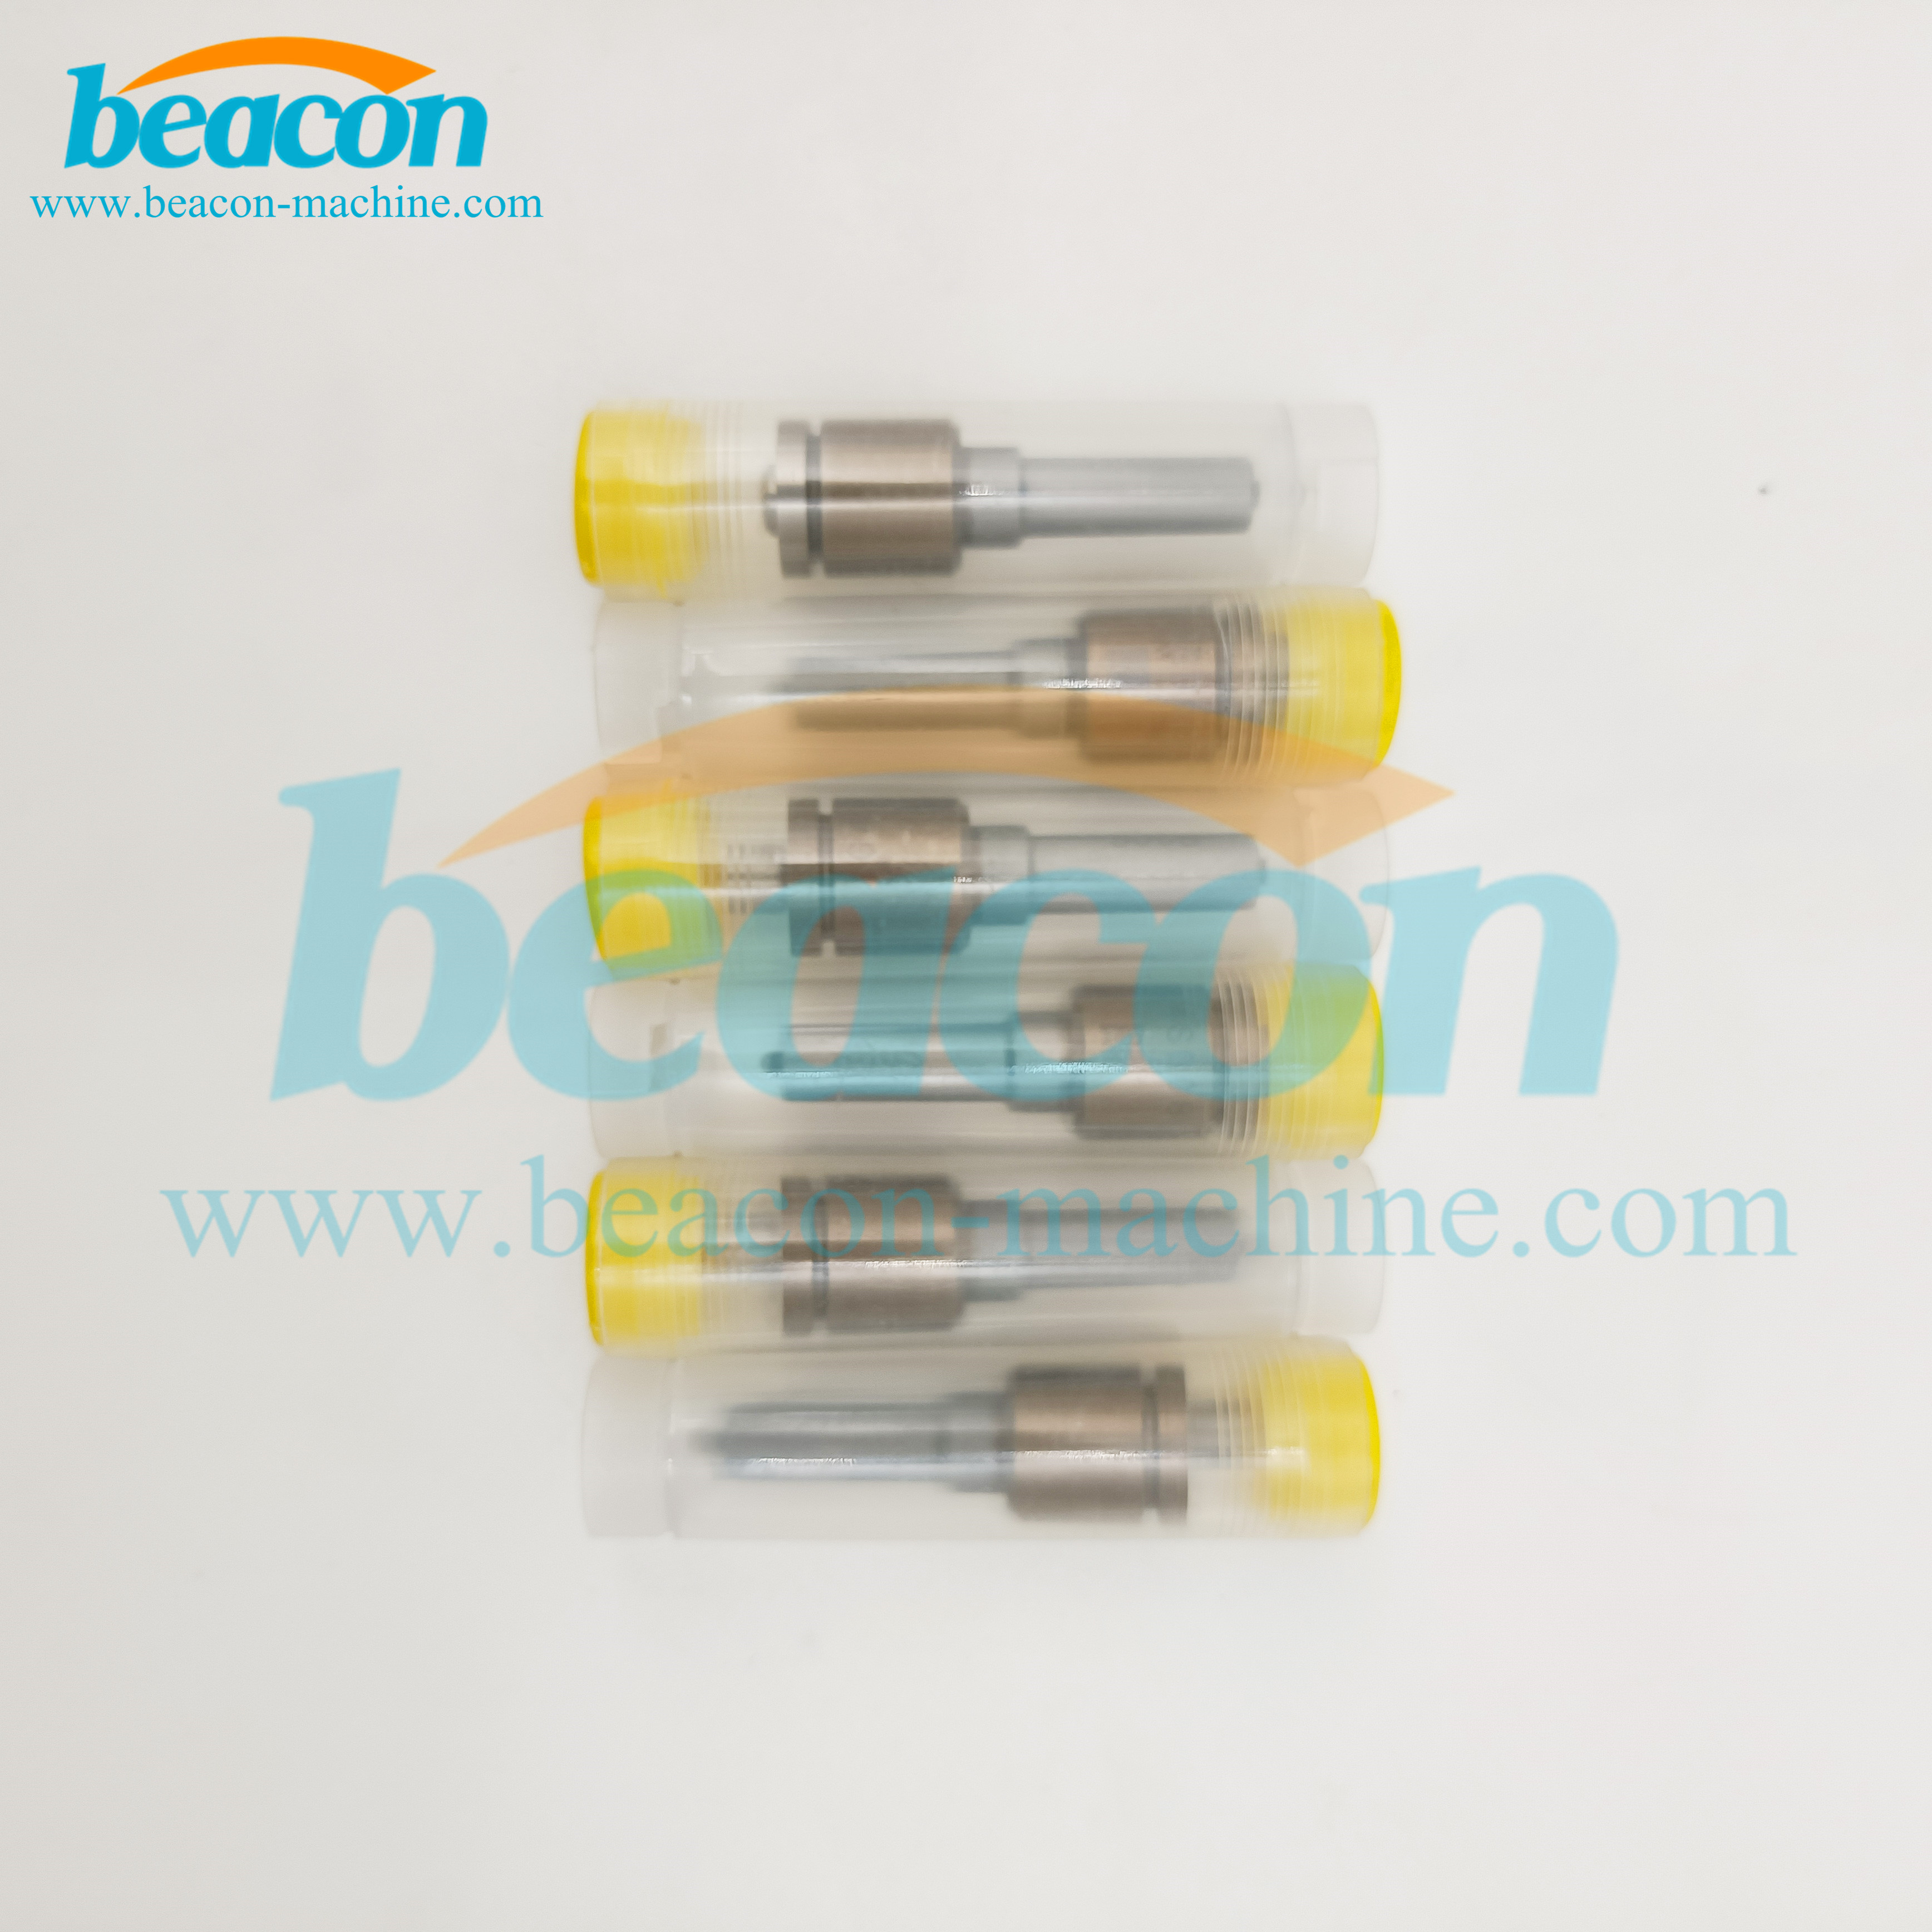 Diesel Fuel Injector Nozzle G4S008 Beacon Machine 2GD FTV injector 23670-0E020 Diesel injector nozzles